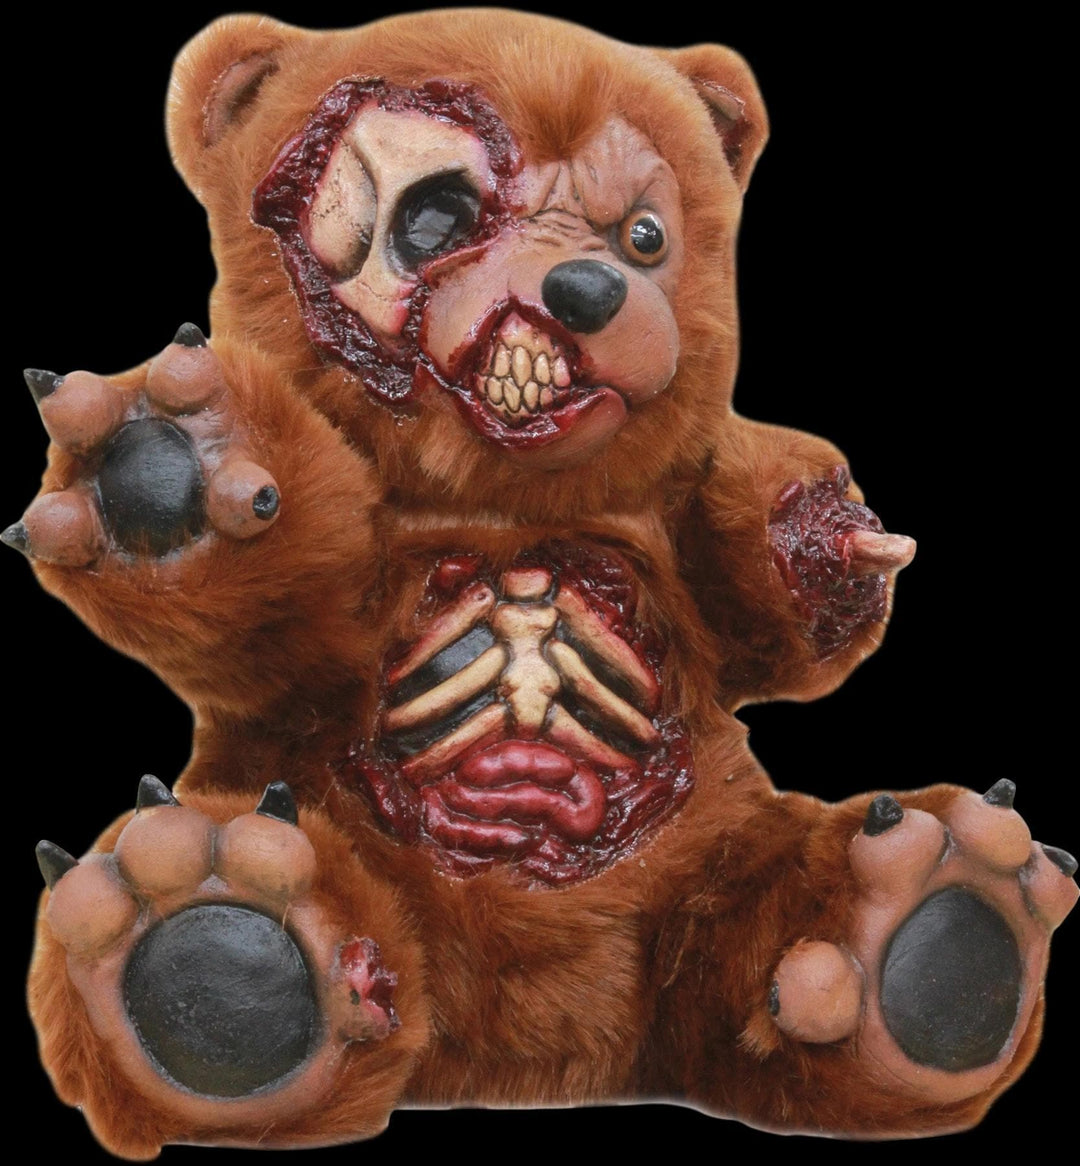 "Bad Teddy" Evil Gory Doll Halloween Prop